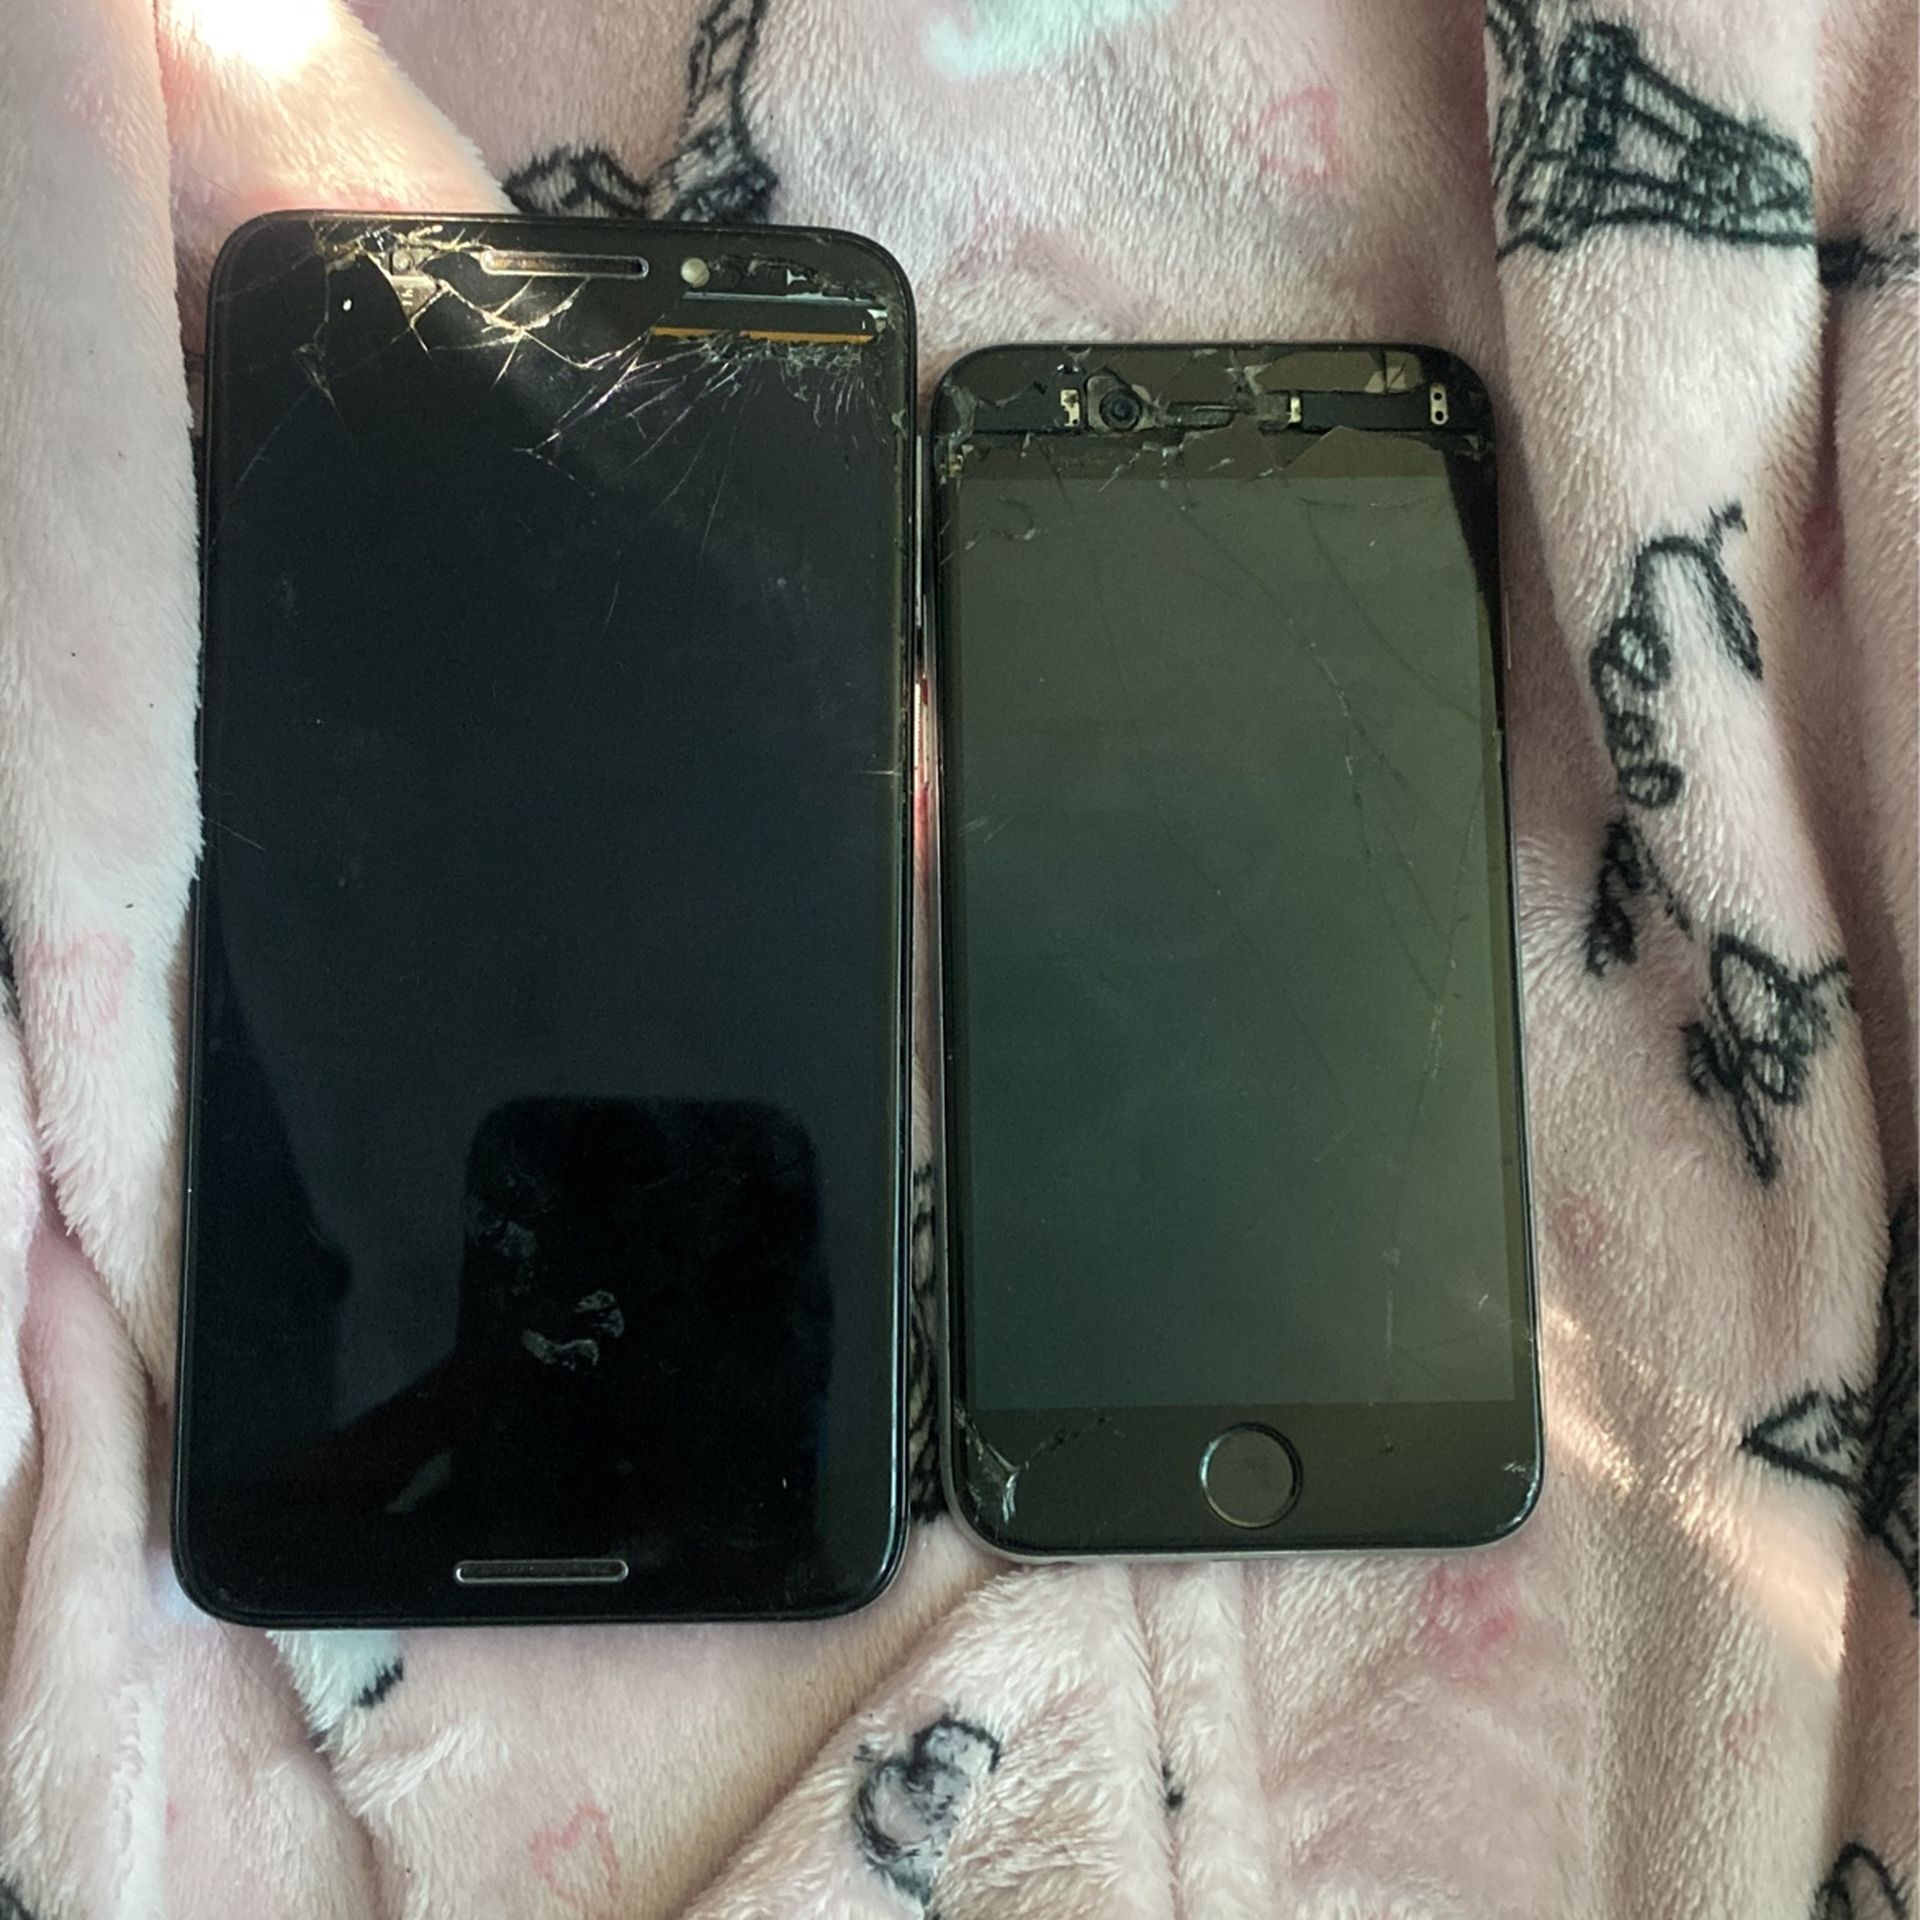 Broken iPhone & Android 